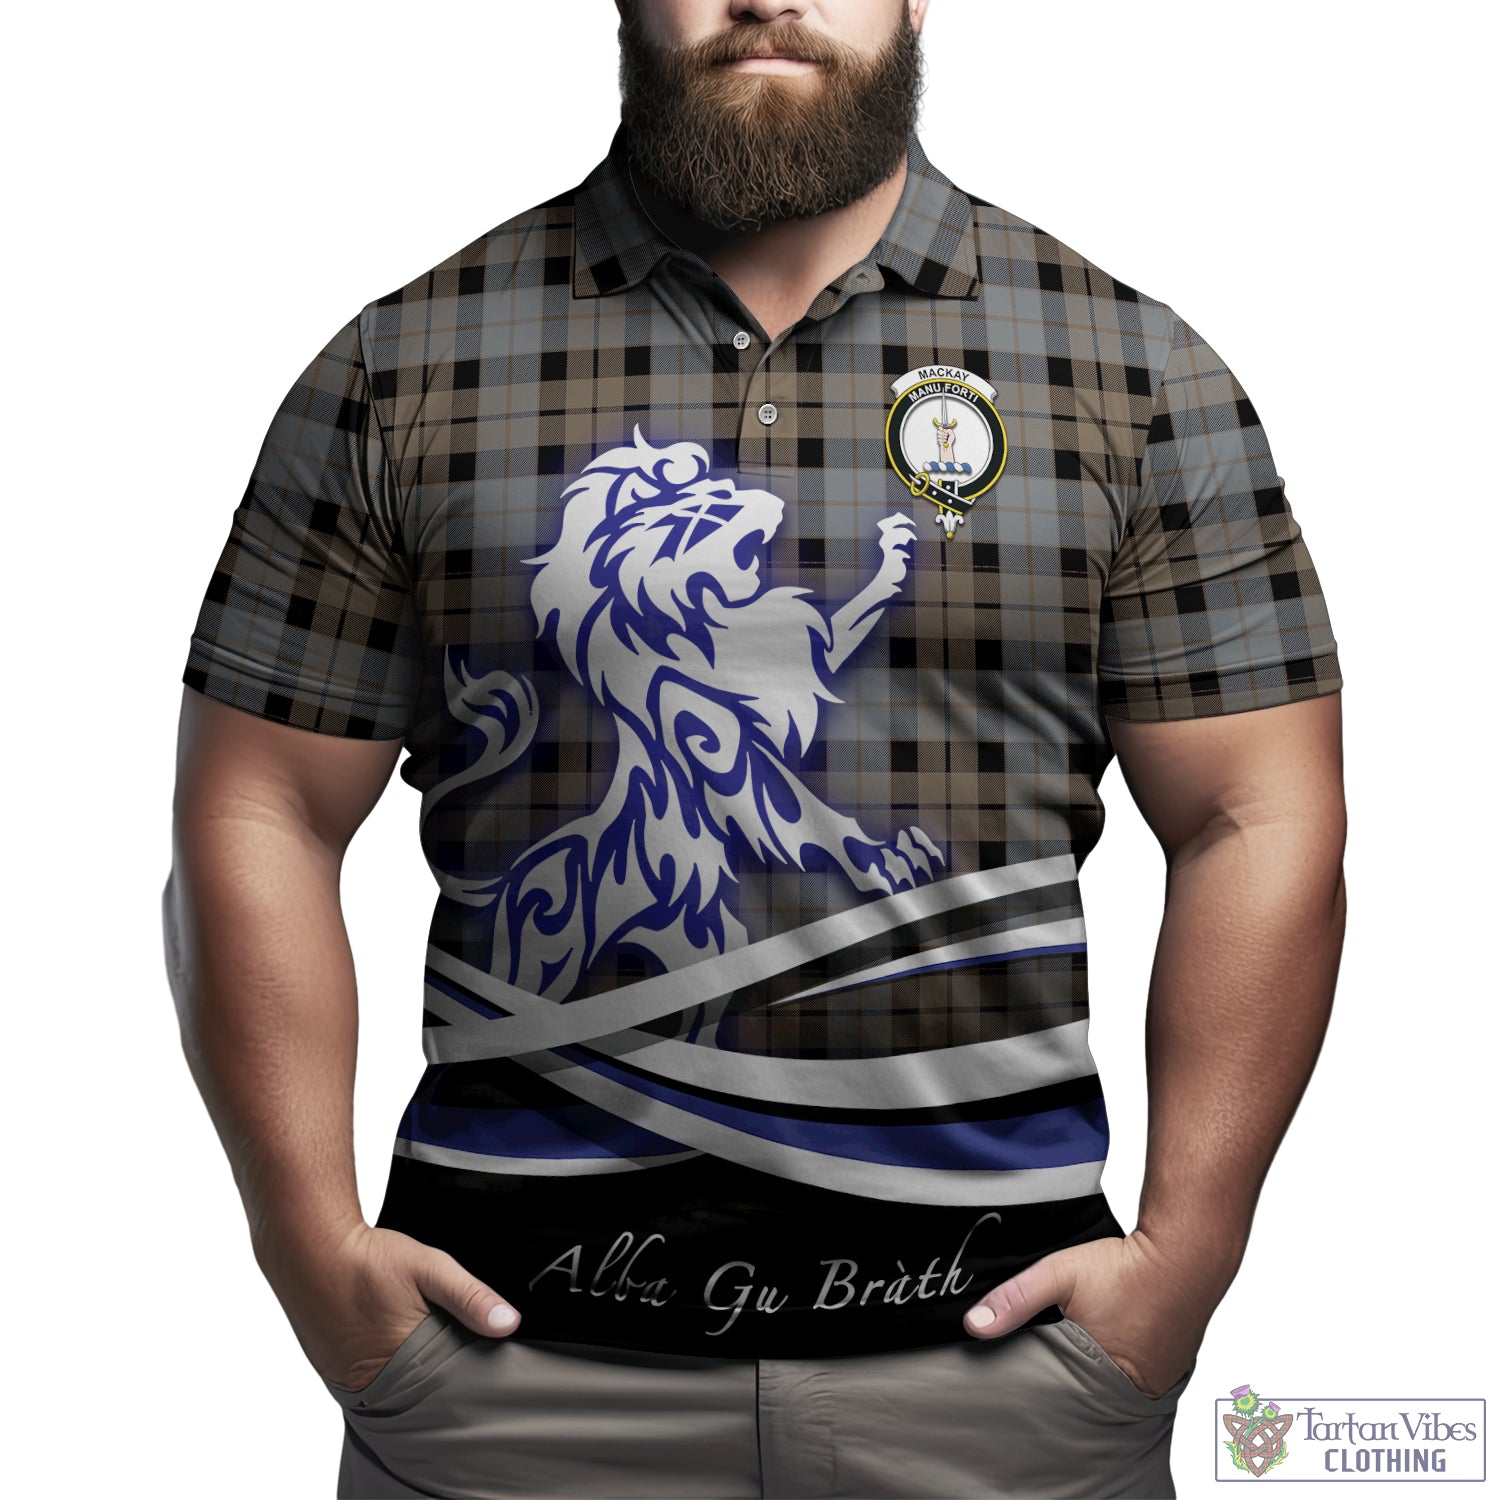 mackay-weathered-tartan-polo-shirt-with-alba-gu-brath-regal-lion-emblem